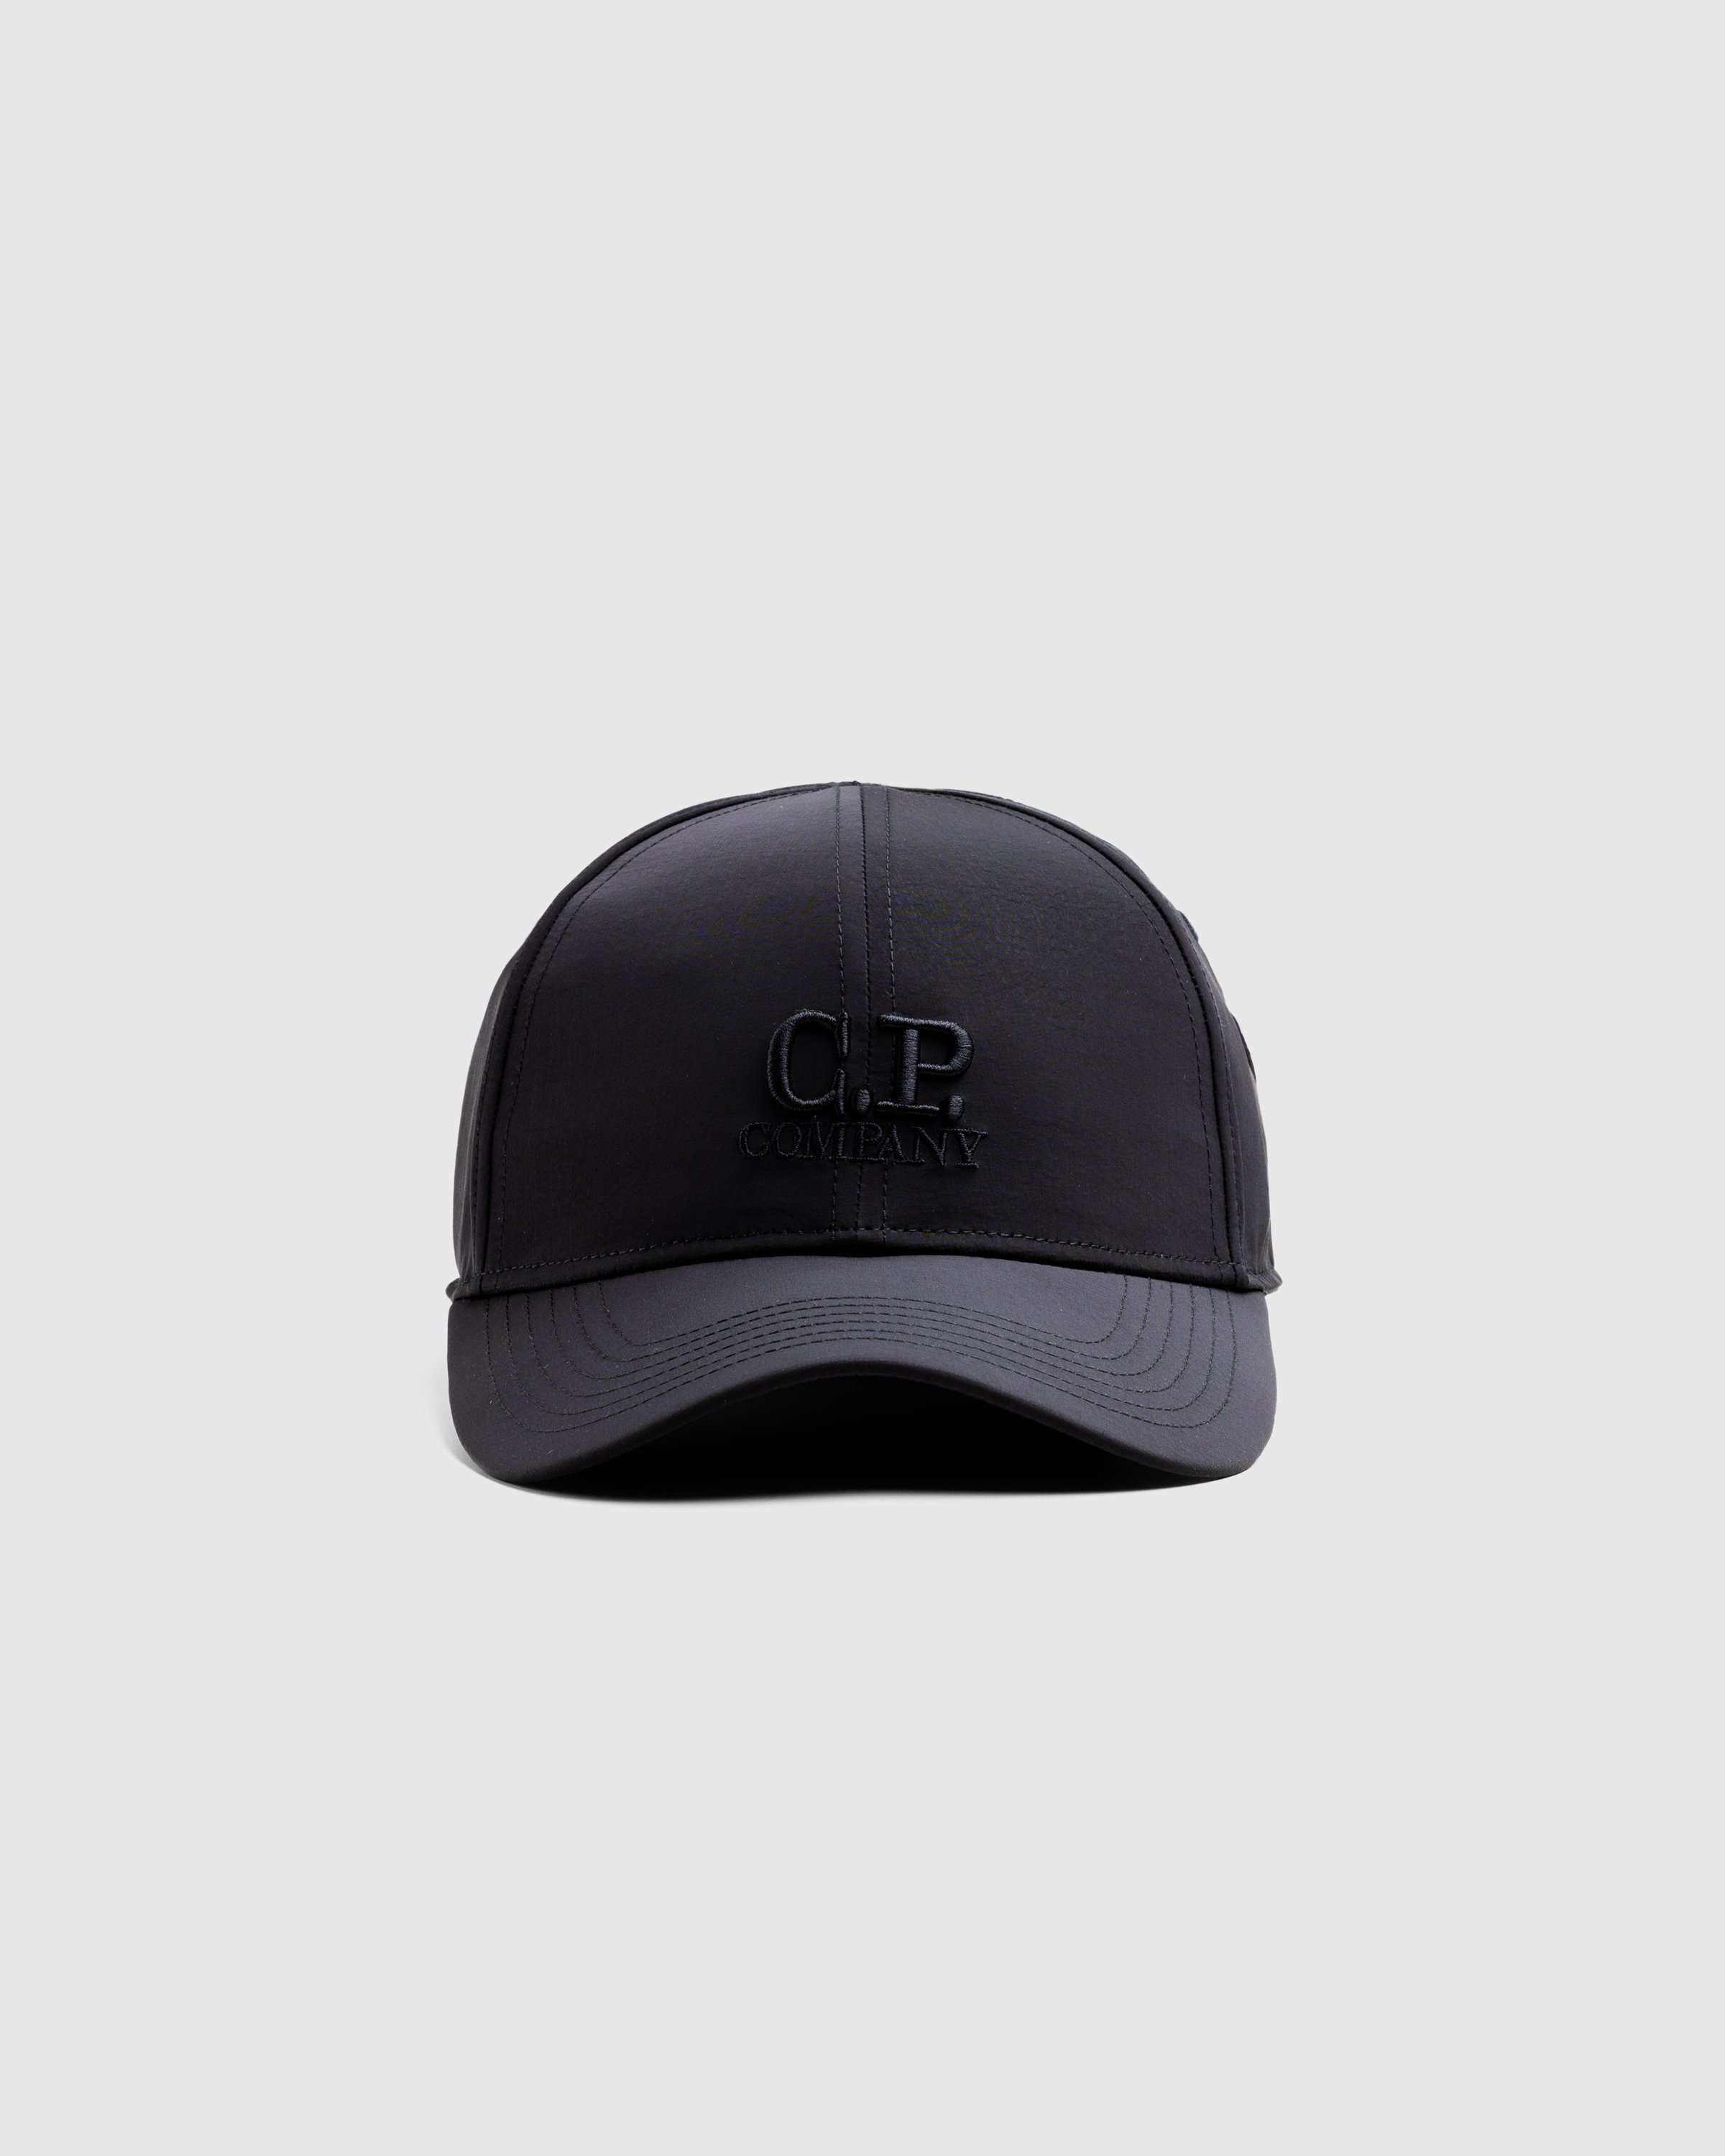 C.P. Company - ACCESSORIES - BASEBALL CAP BLACK - Accessories - Black - Image 2